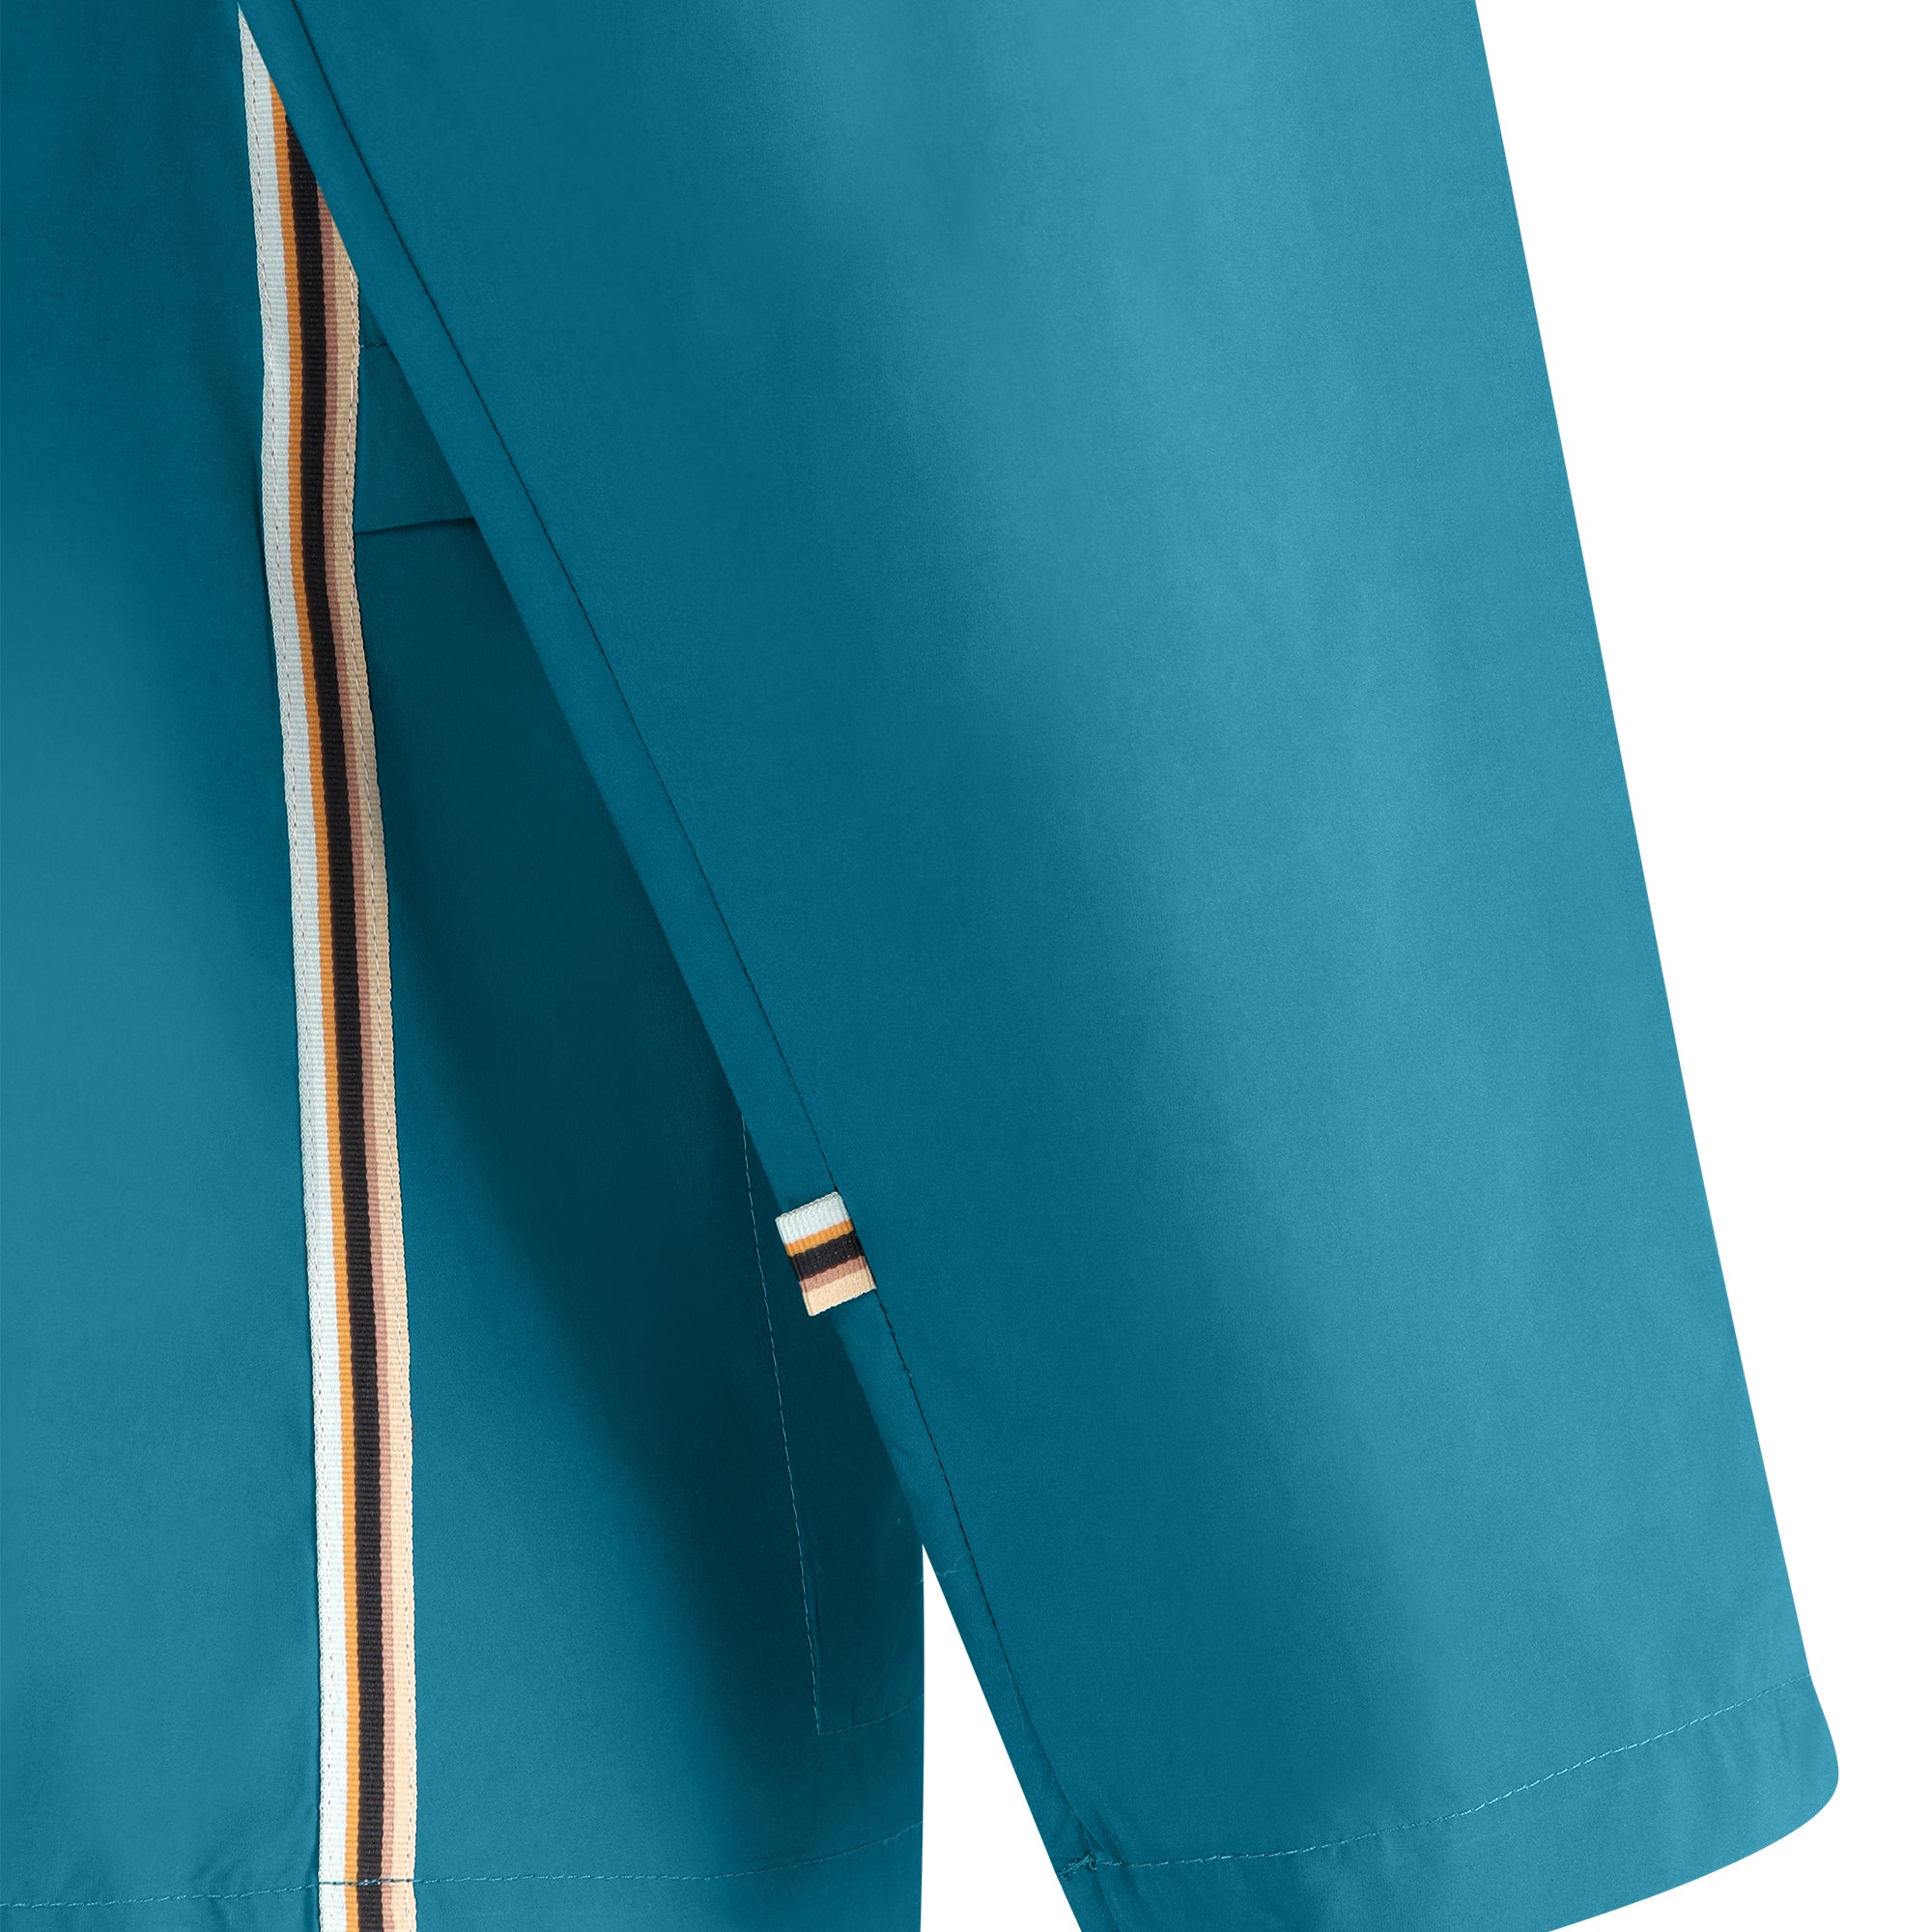 Bise raincoat - Ocean Blue color - sleeve detail